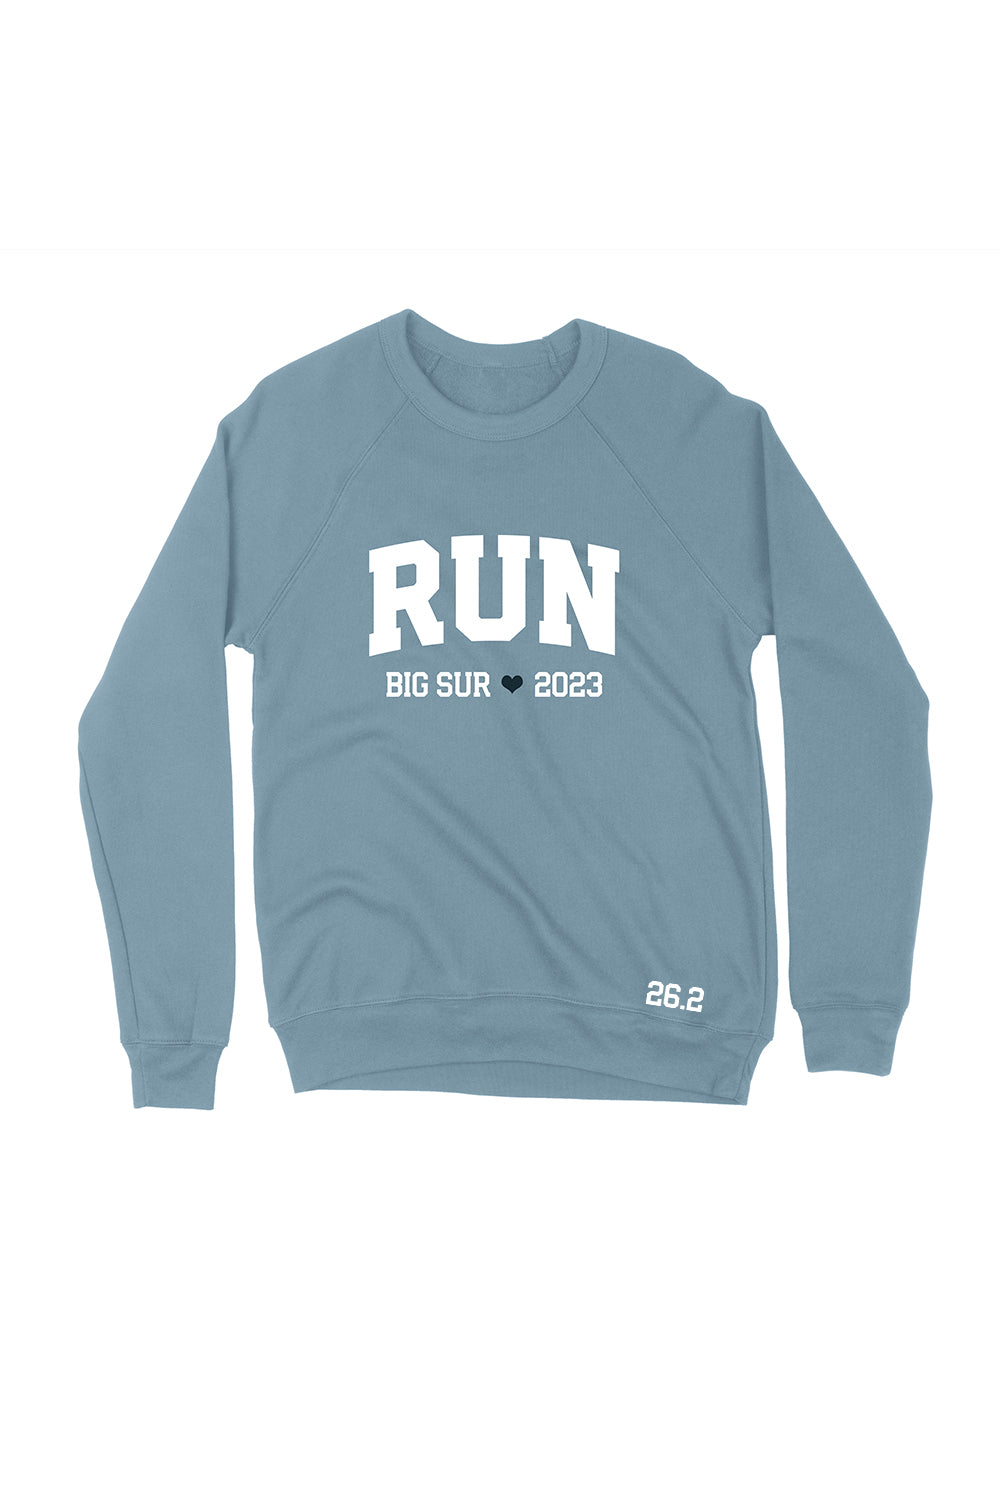 RUN Big Sur 2023 Sweatshirt